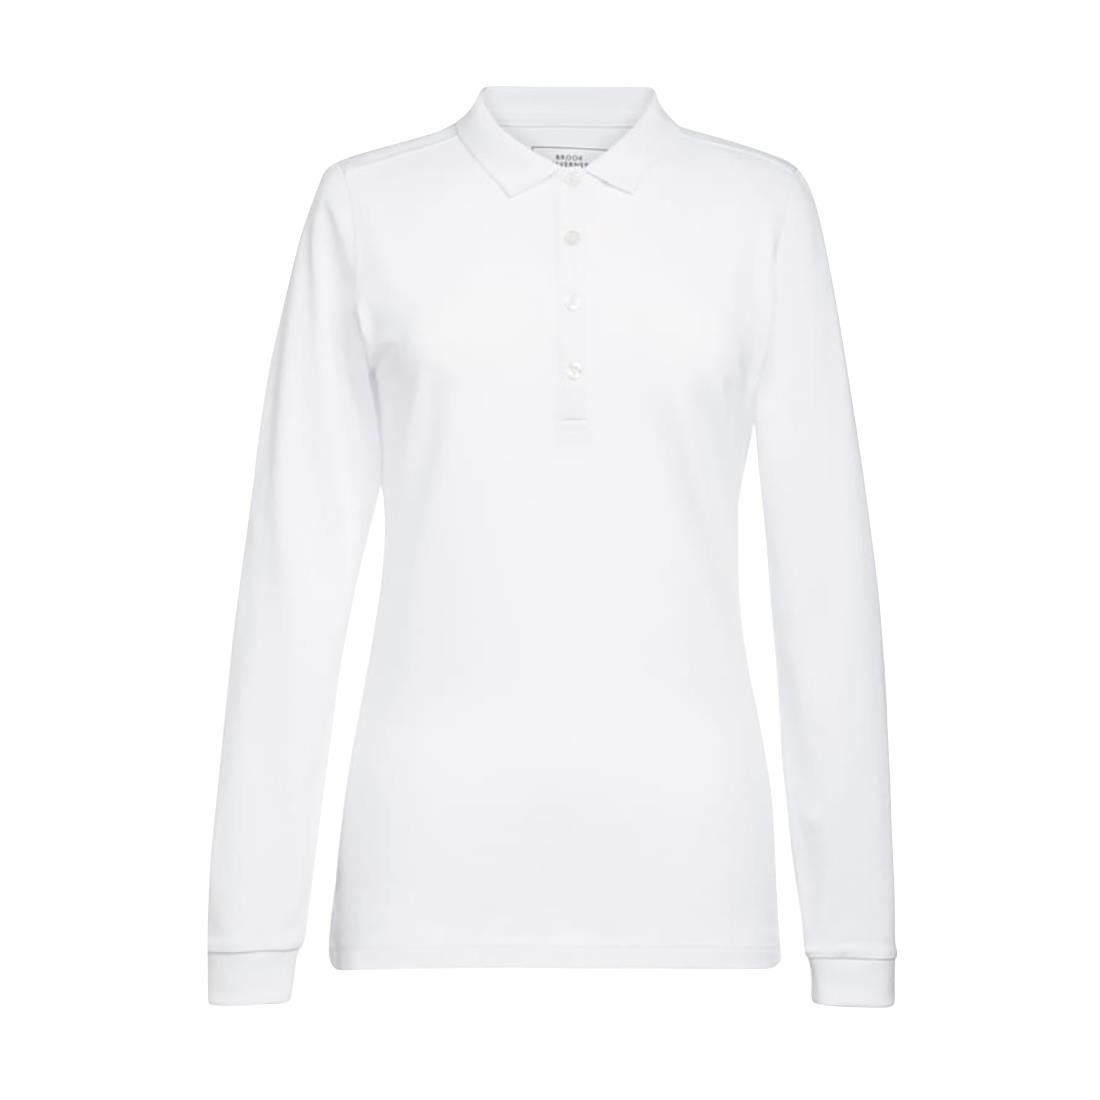 BA141-S Brook Taverner Anna Womens Long Sleeve Polo Shirt White Size S